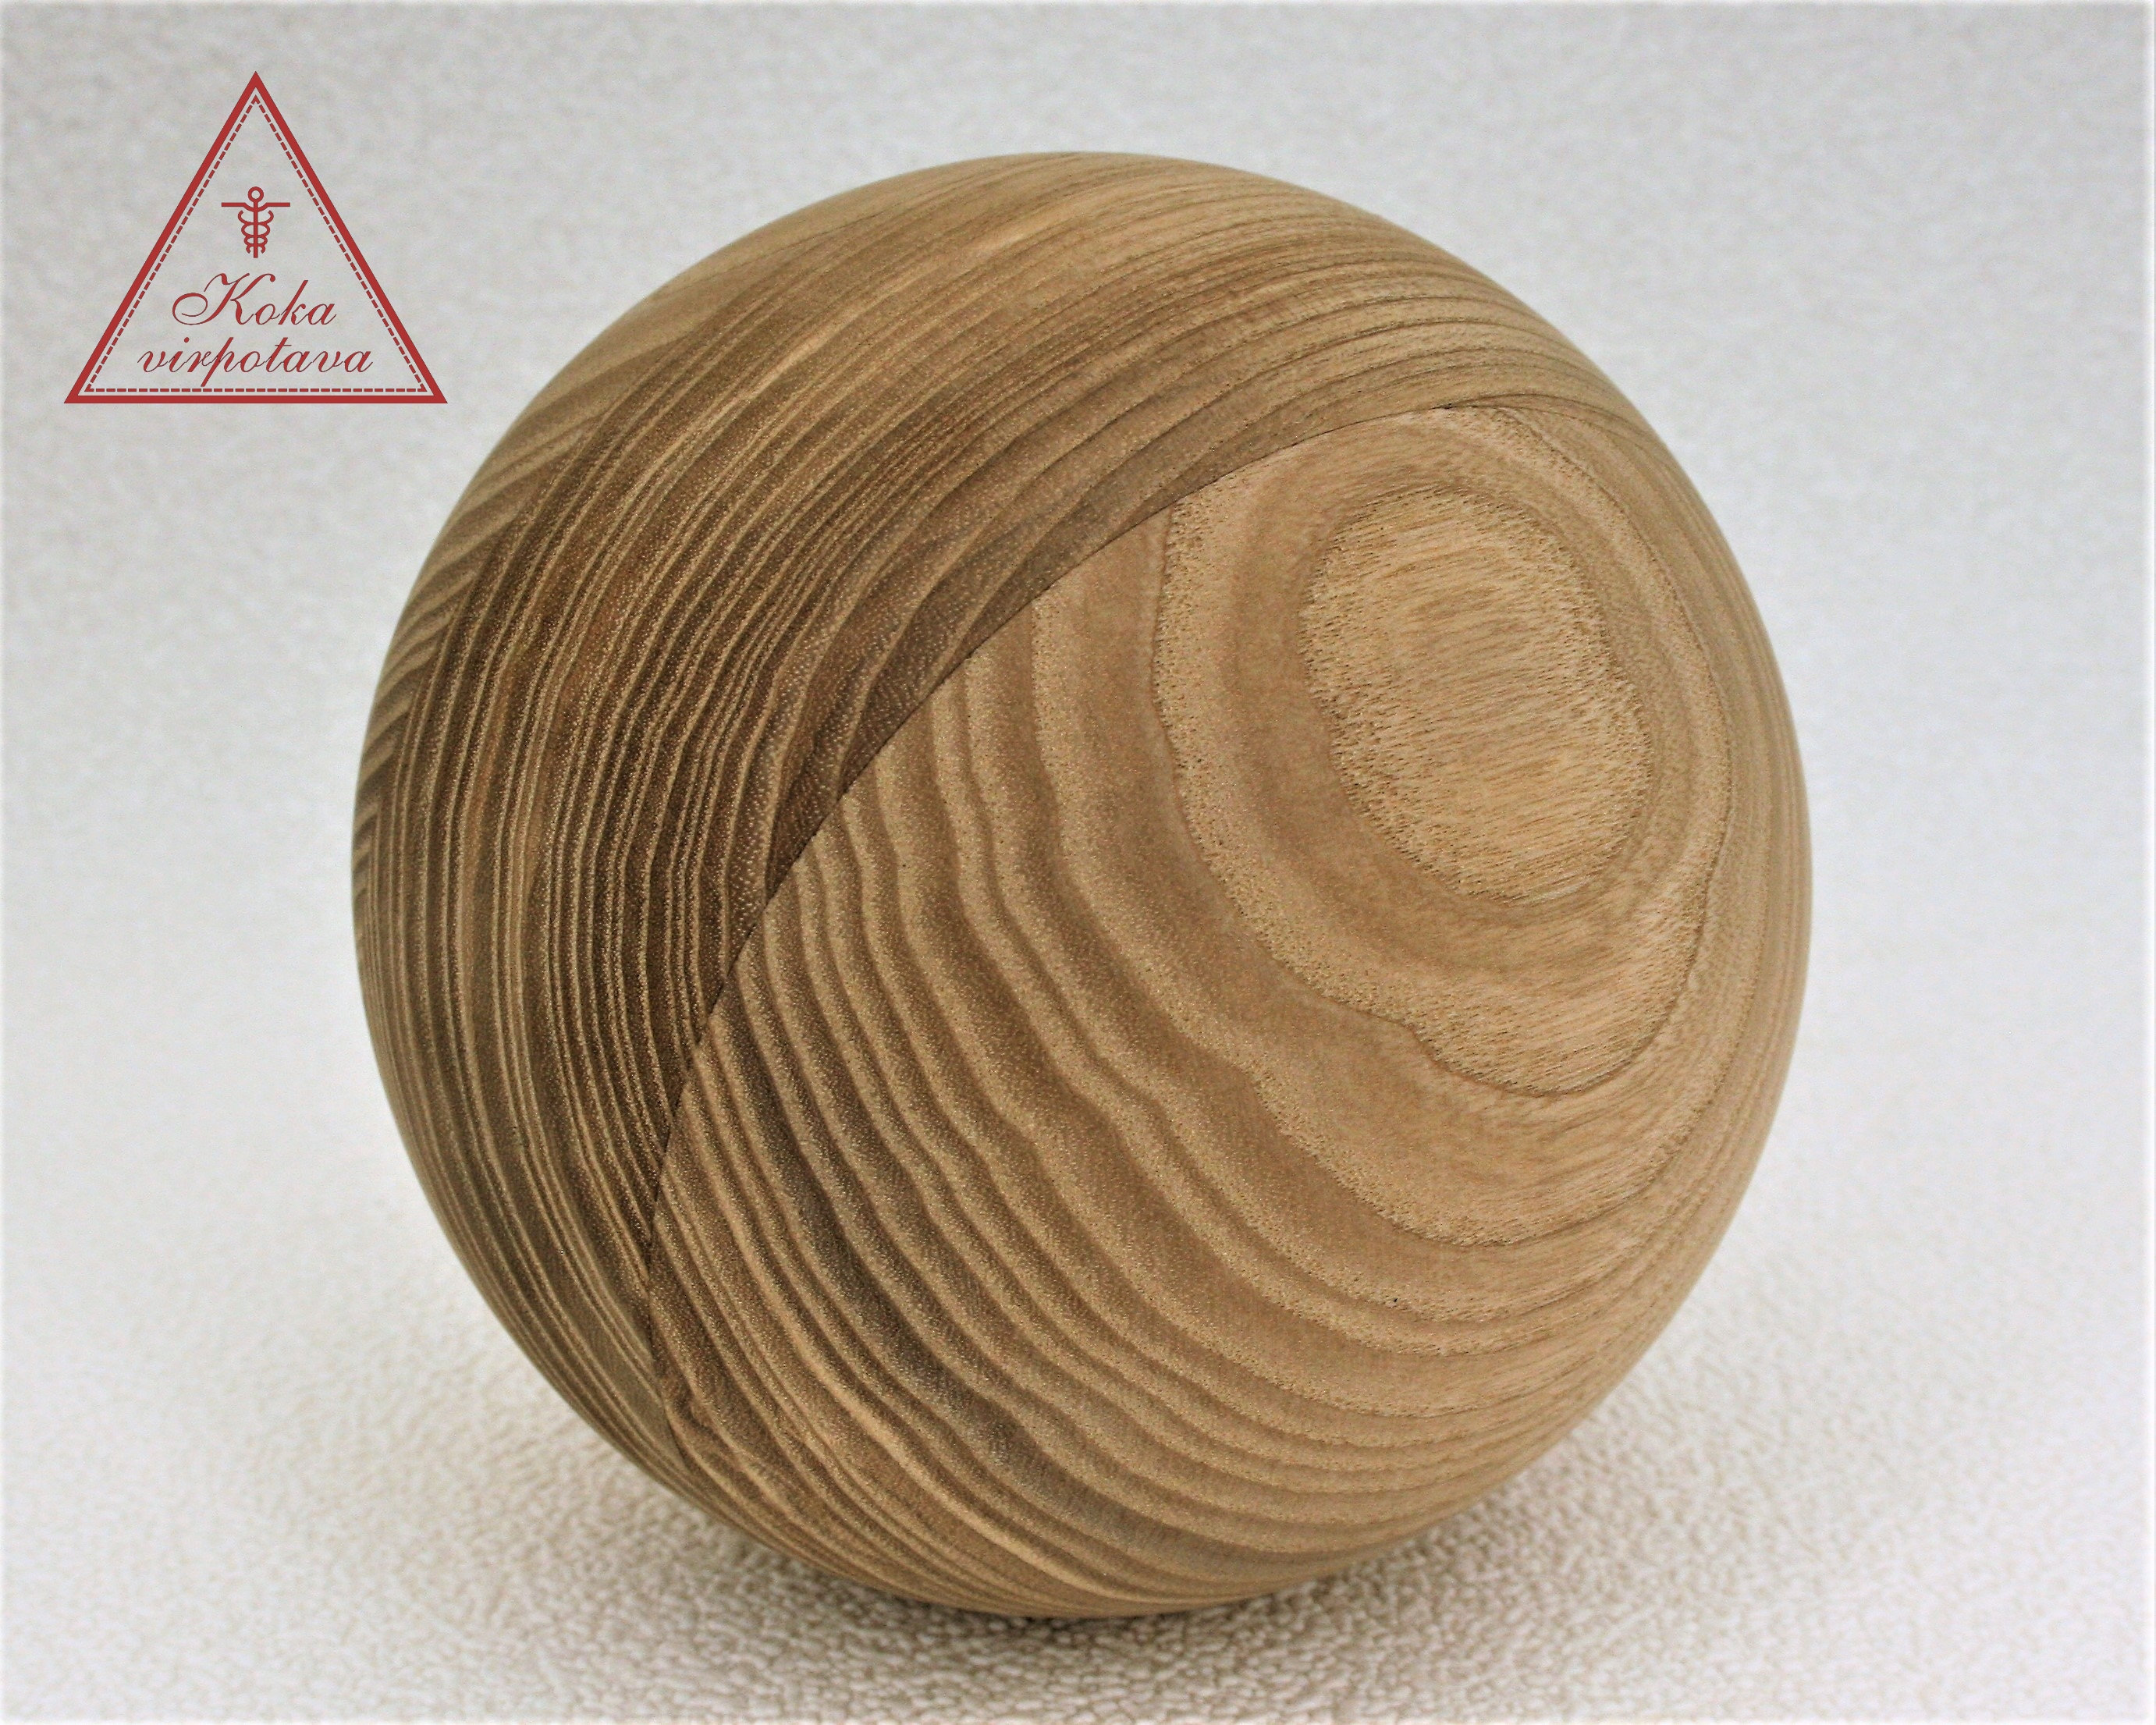 Wood Ball 120 Mm Large Wood Ball Wood Sphere 120 Mm Wood Ball 4,72 Turned Wooden  Ball Wood Ball Ornament Unfinished Wood Ball Quality Ball 